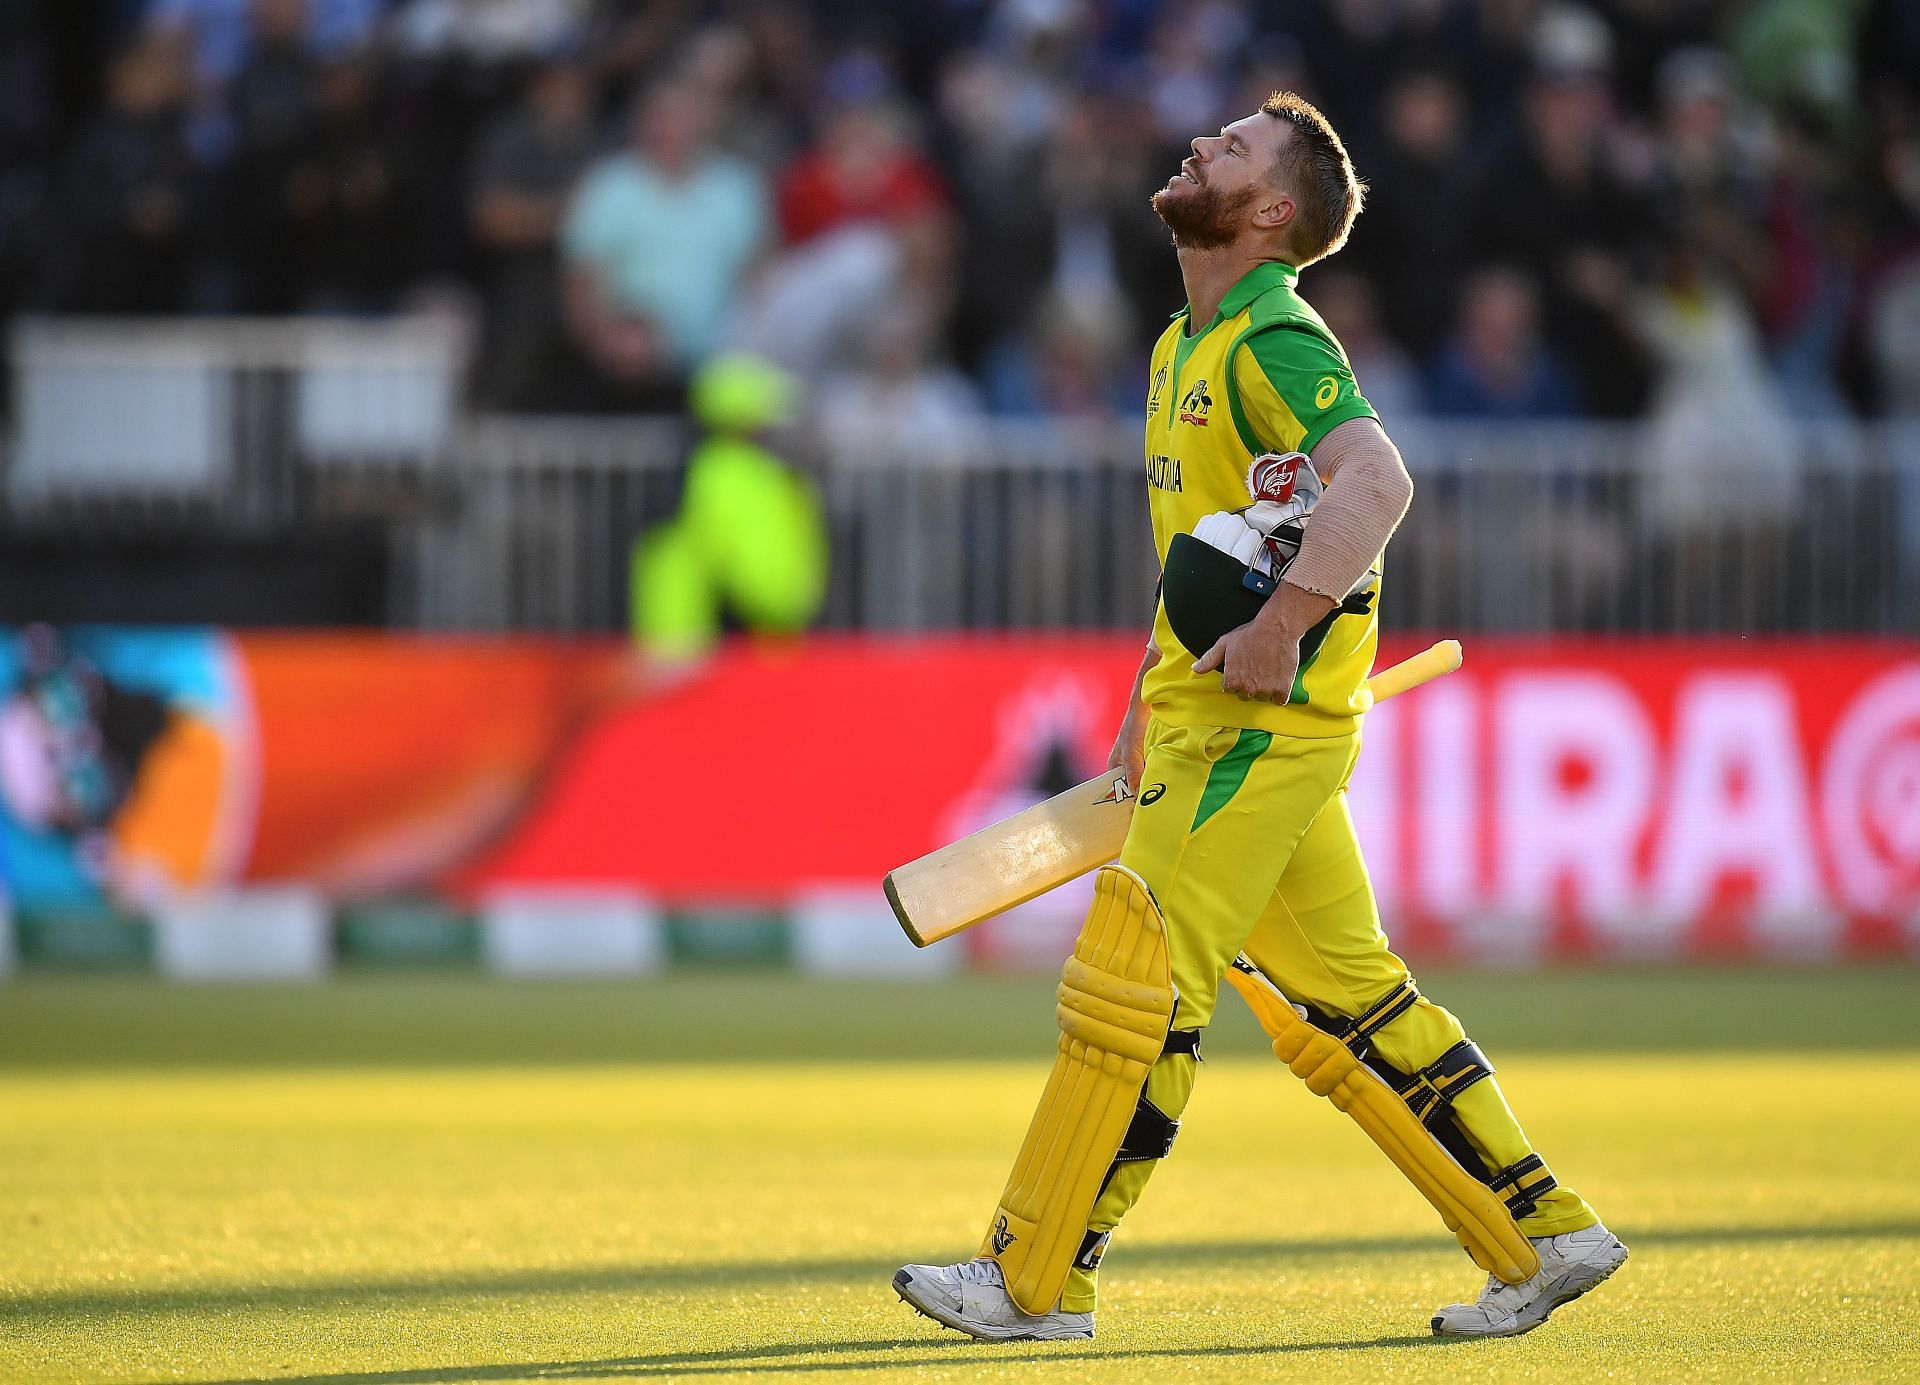 David Warner in action, Australia v South Africa - ICC Cricket World Cup 2019